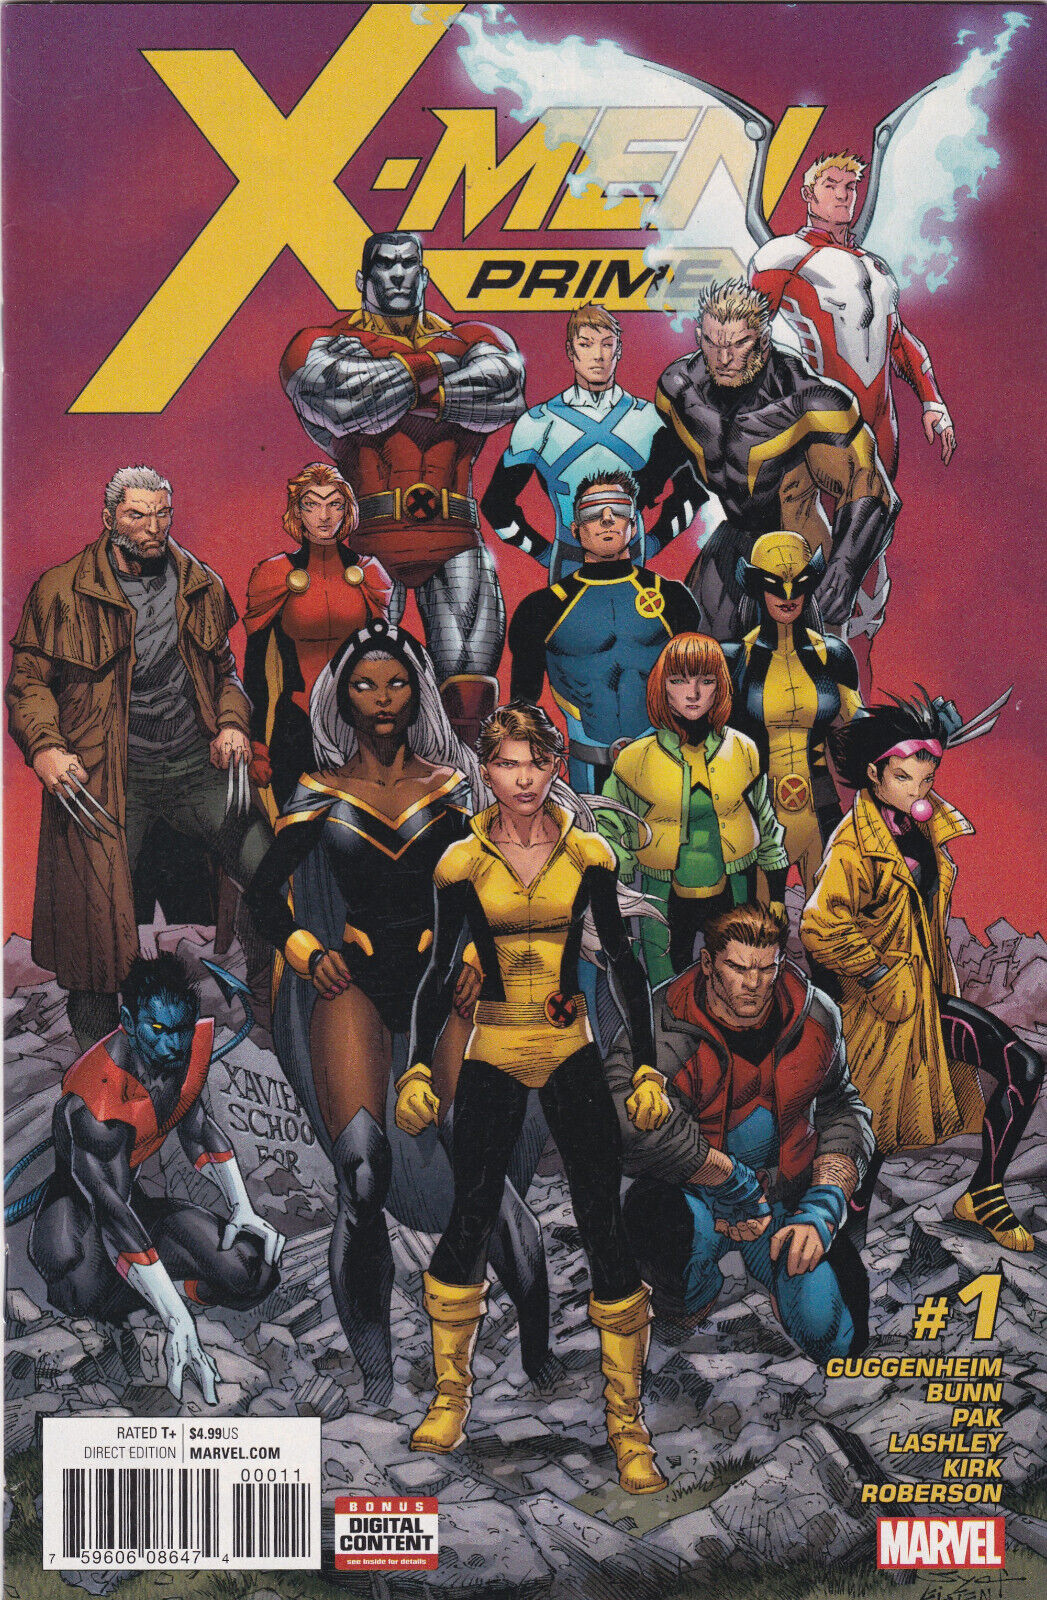 X-Men Prime #1 (Marvel Comics May 2017) X-men 97’ Kitty Pryde High Grade